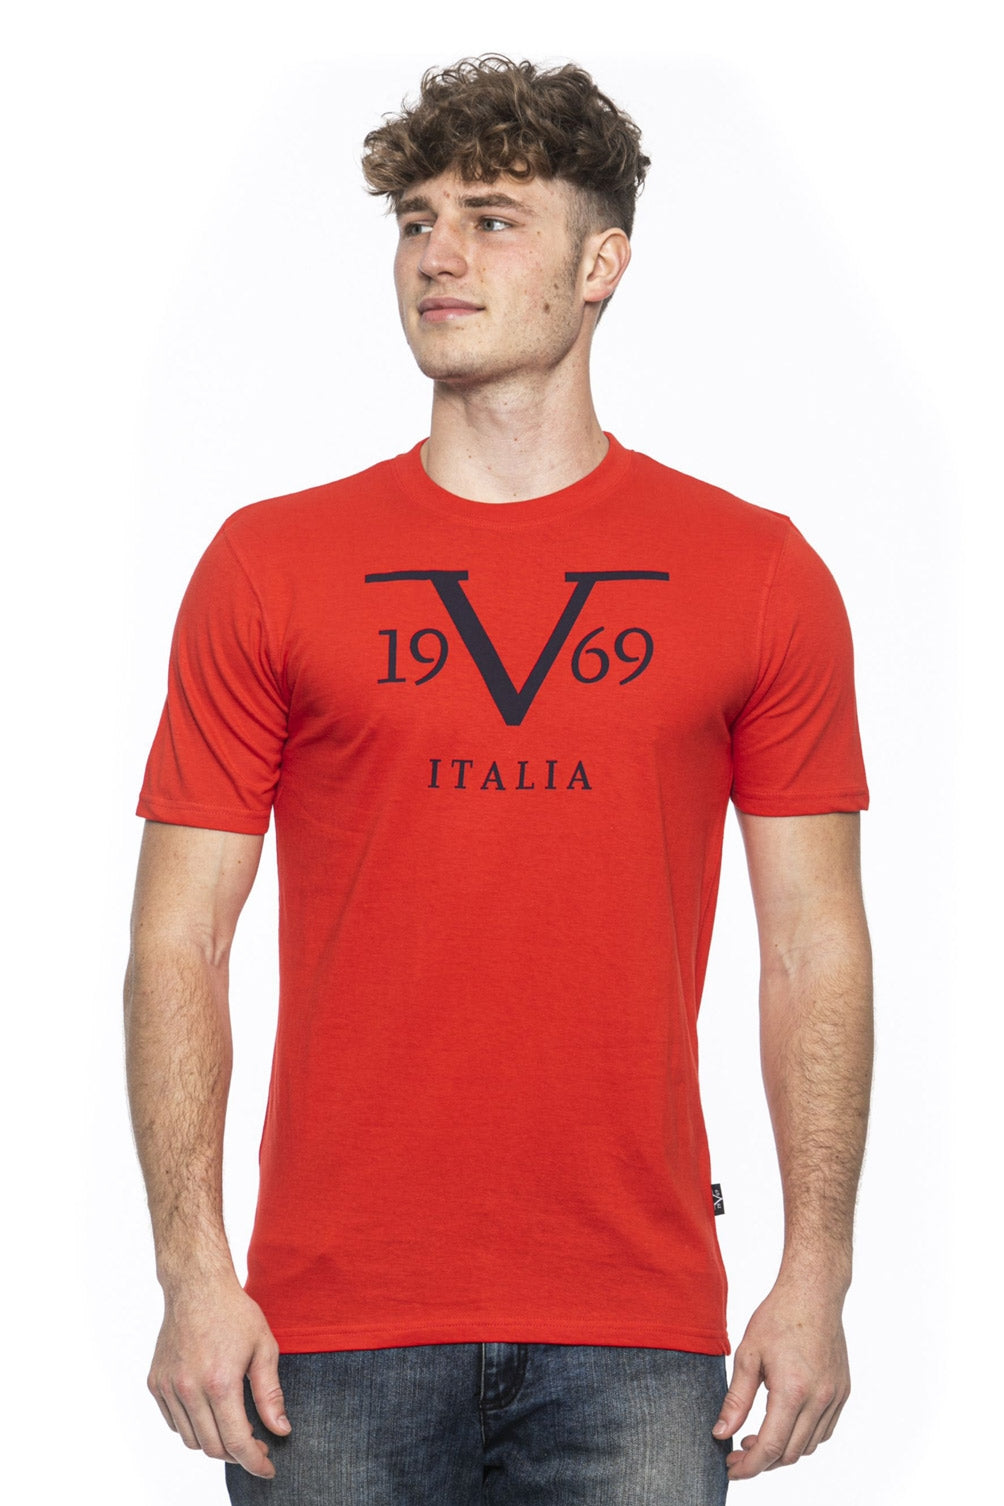 19V69 Italia Mens T-Shirt Red RAYAN RED